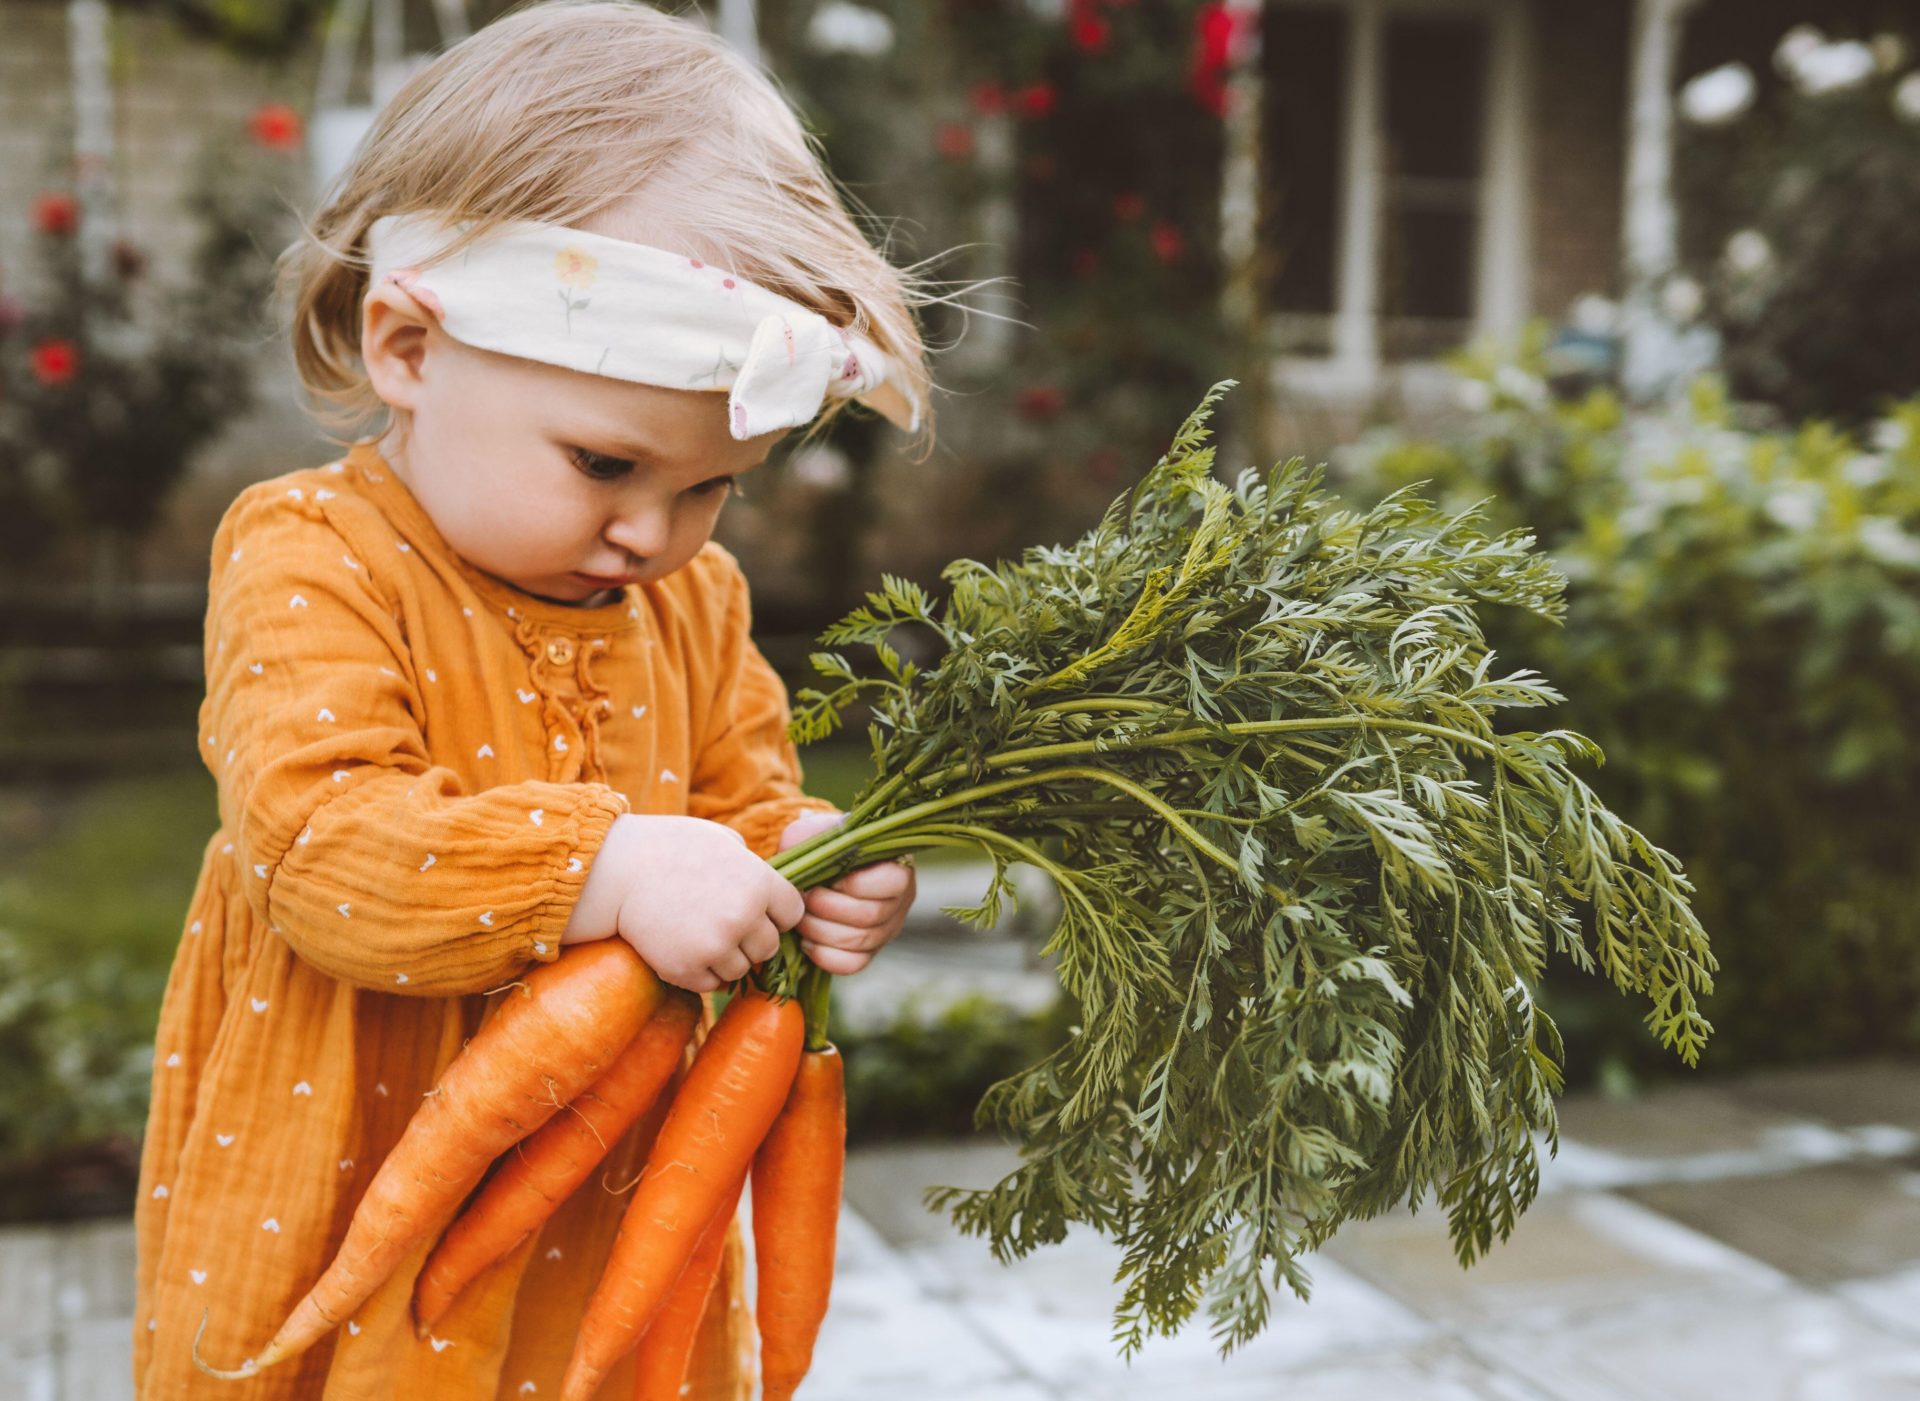 A baby girl holding carrots in a garden.